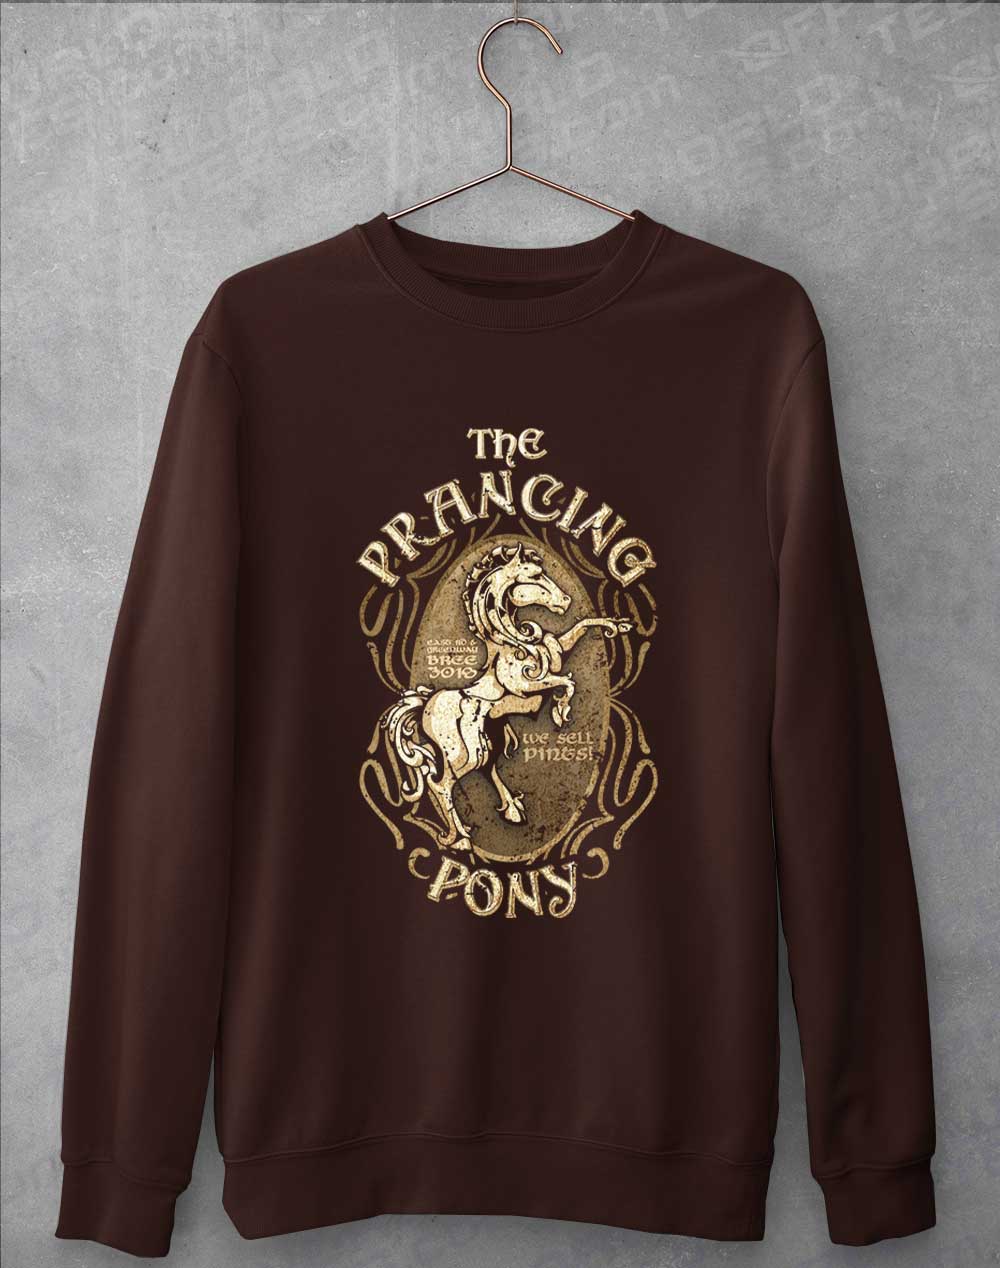 Hot Chocolate - The Prancing Pony Sweatshirt